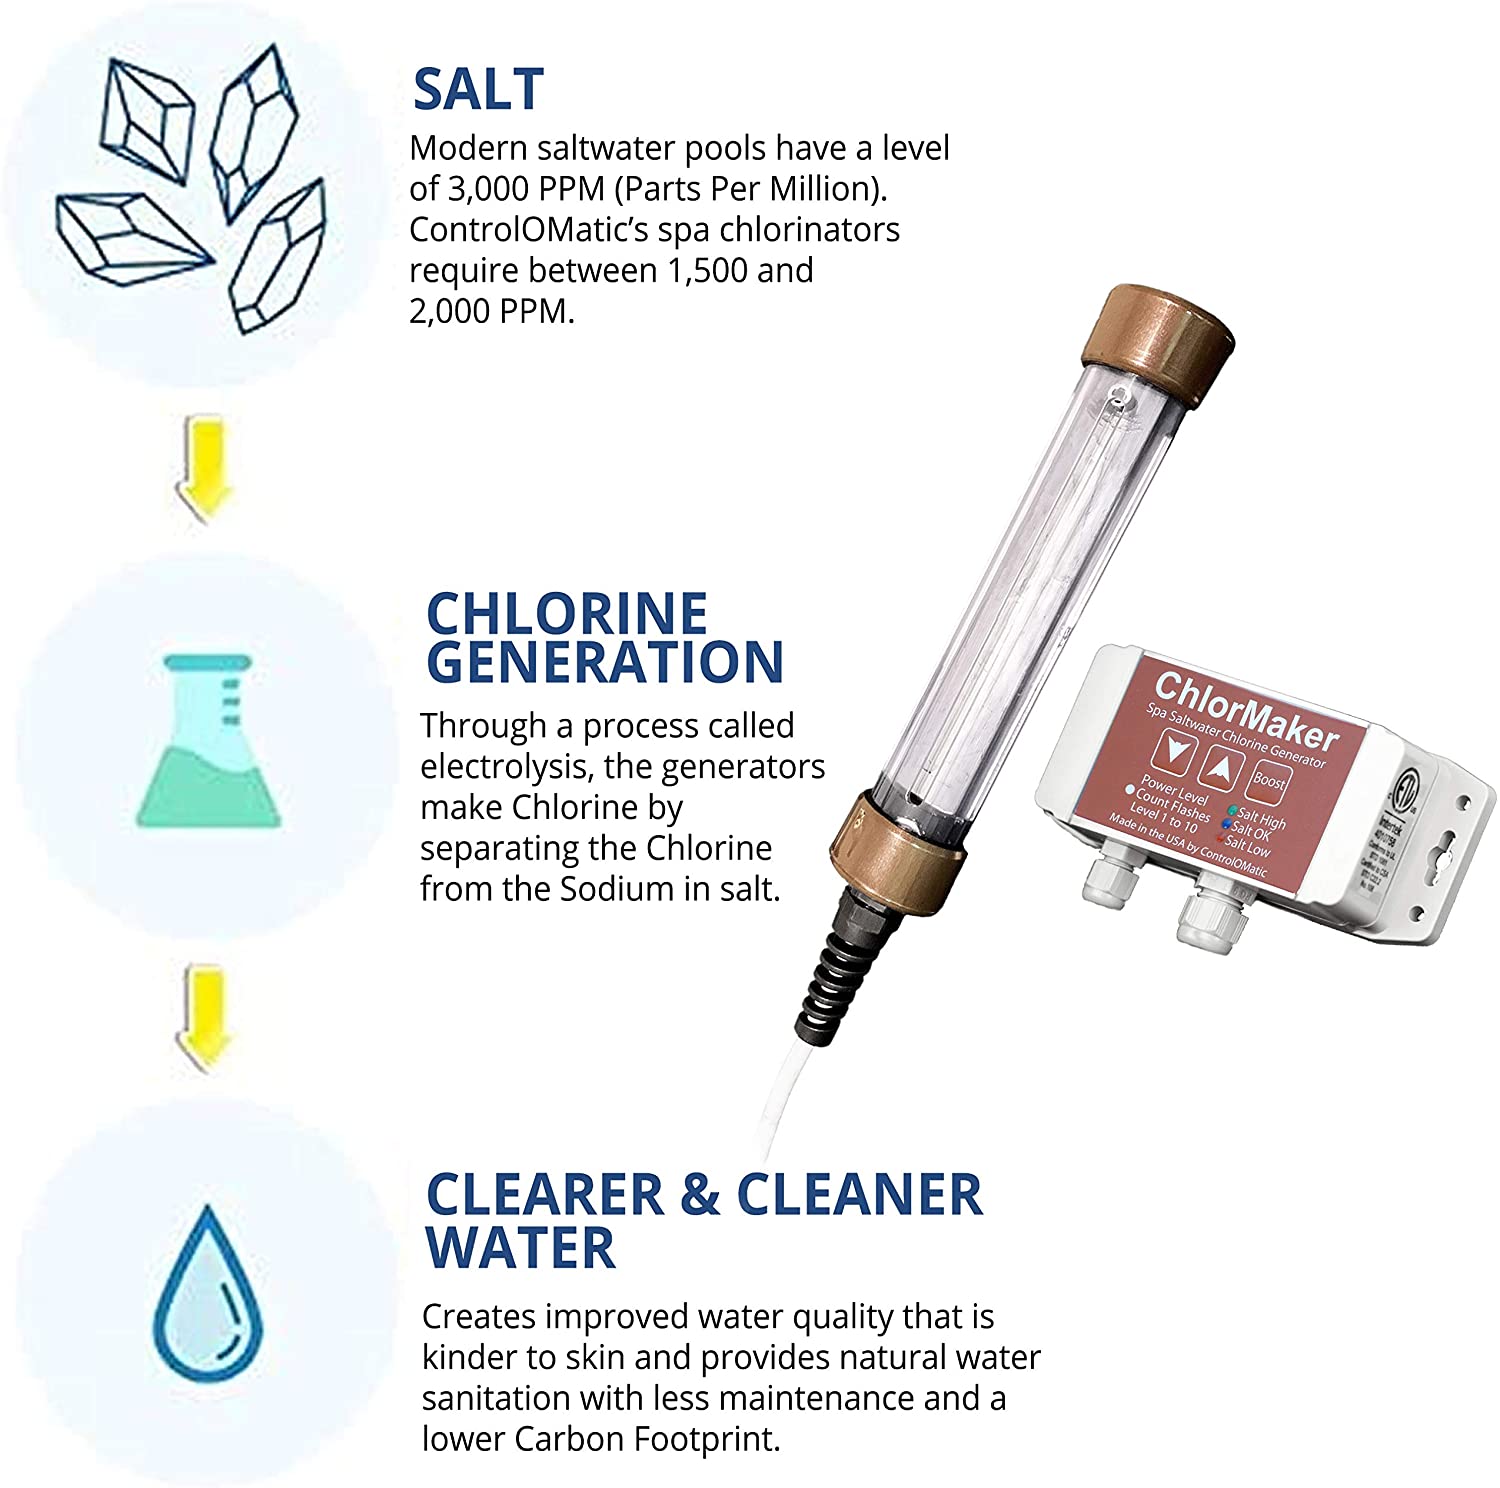 ControlOMatic ChlorMaker Salt Water Pool and Swim Spa Chlorine Generator New